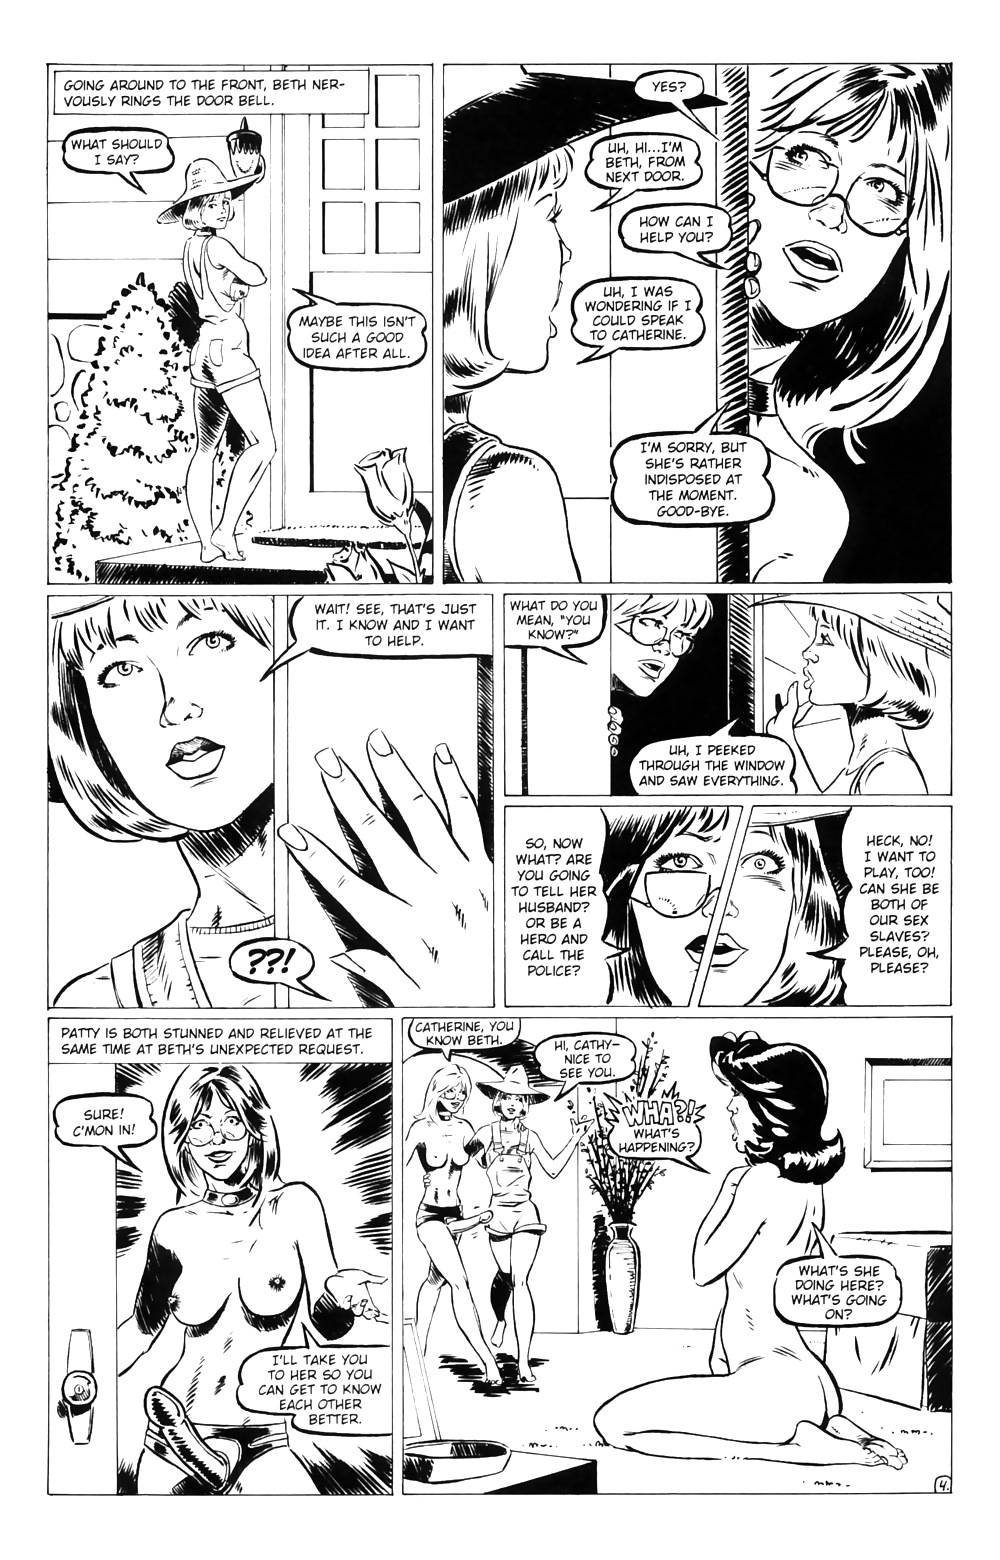 Hausfrauen Am Spiel # 01 - Eros-Comics Von Rebecca - April 2002 #36196543